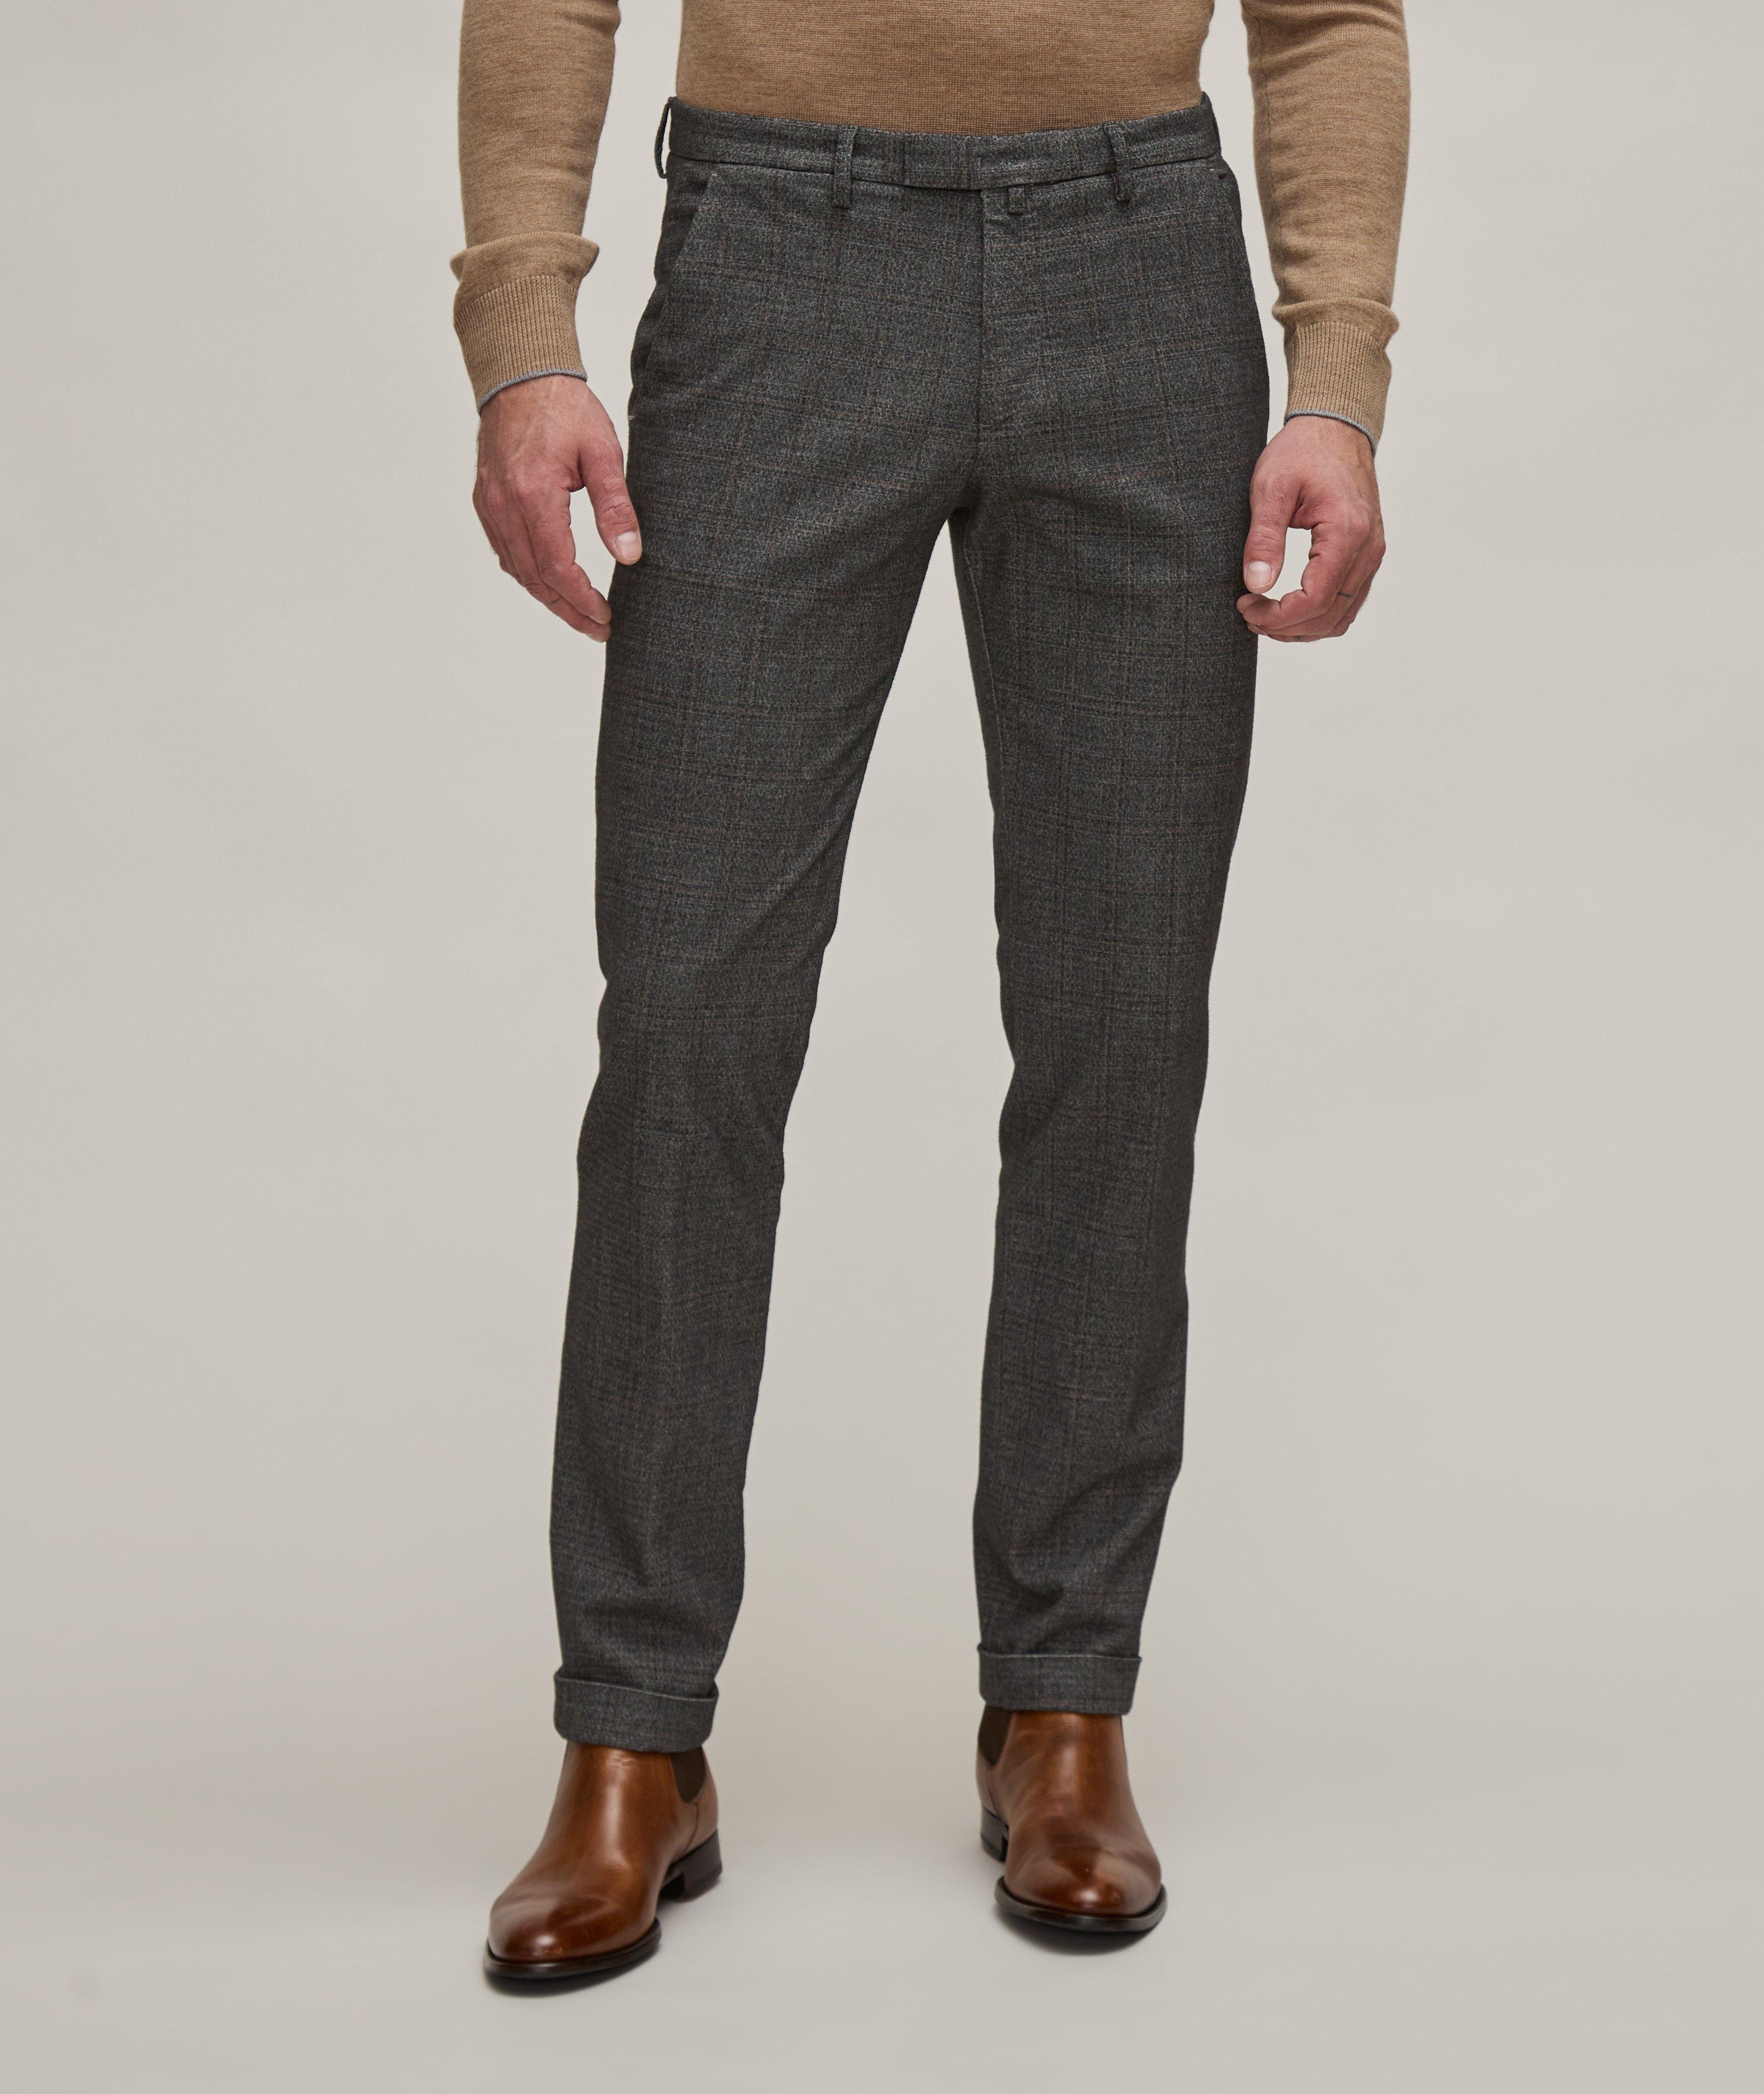 Checkered Cotton-Blend Pants image 2